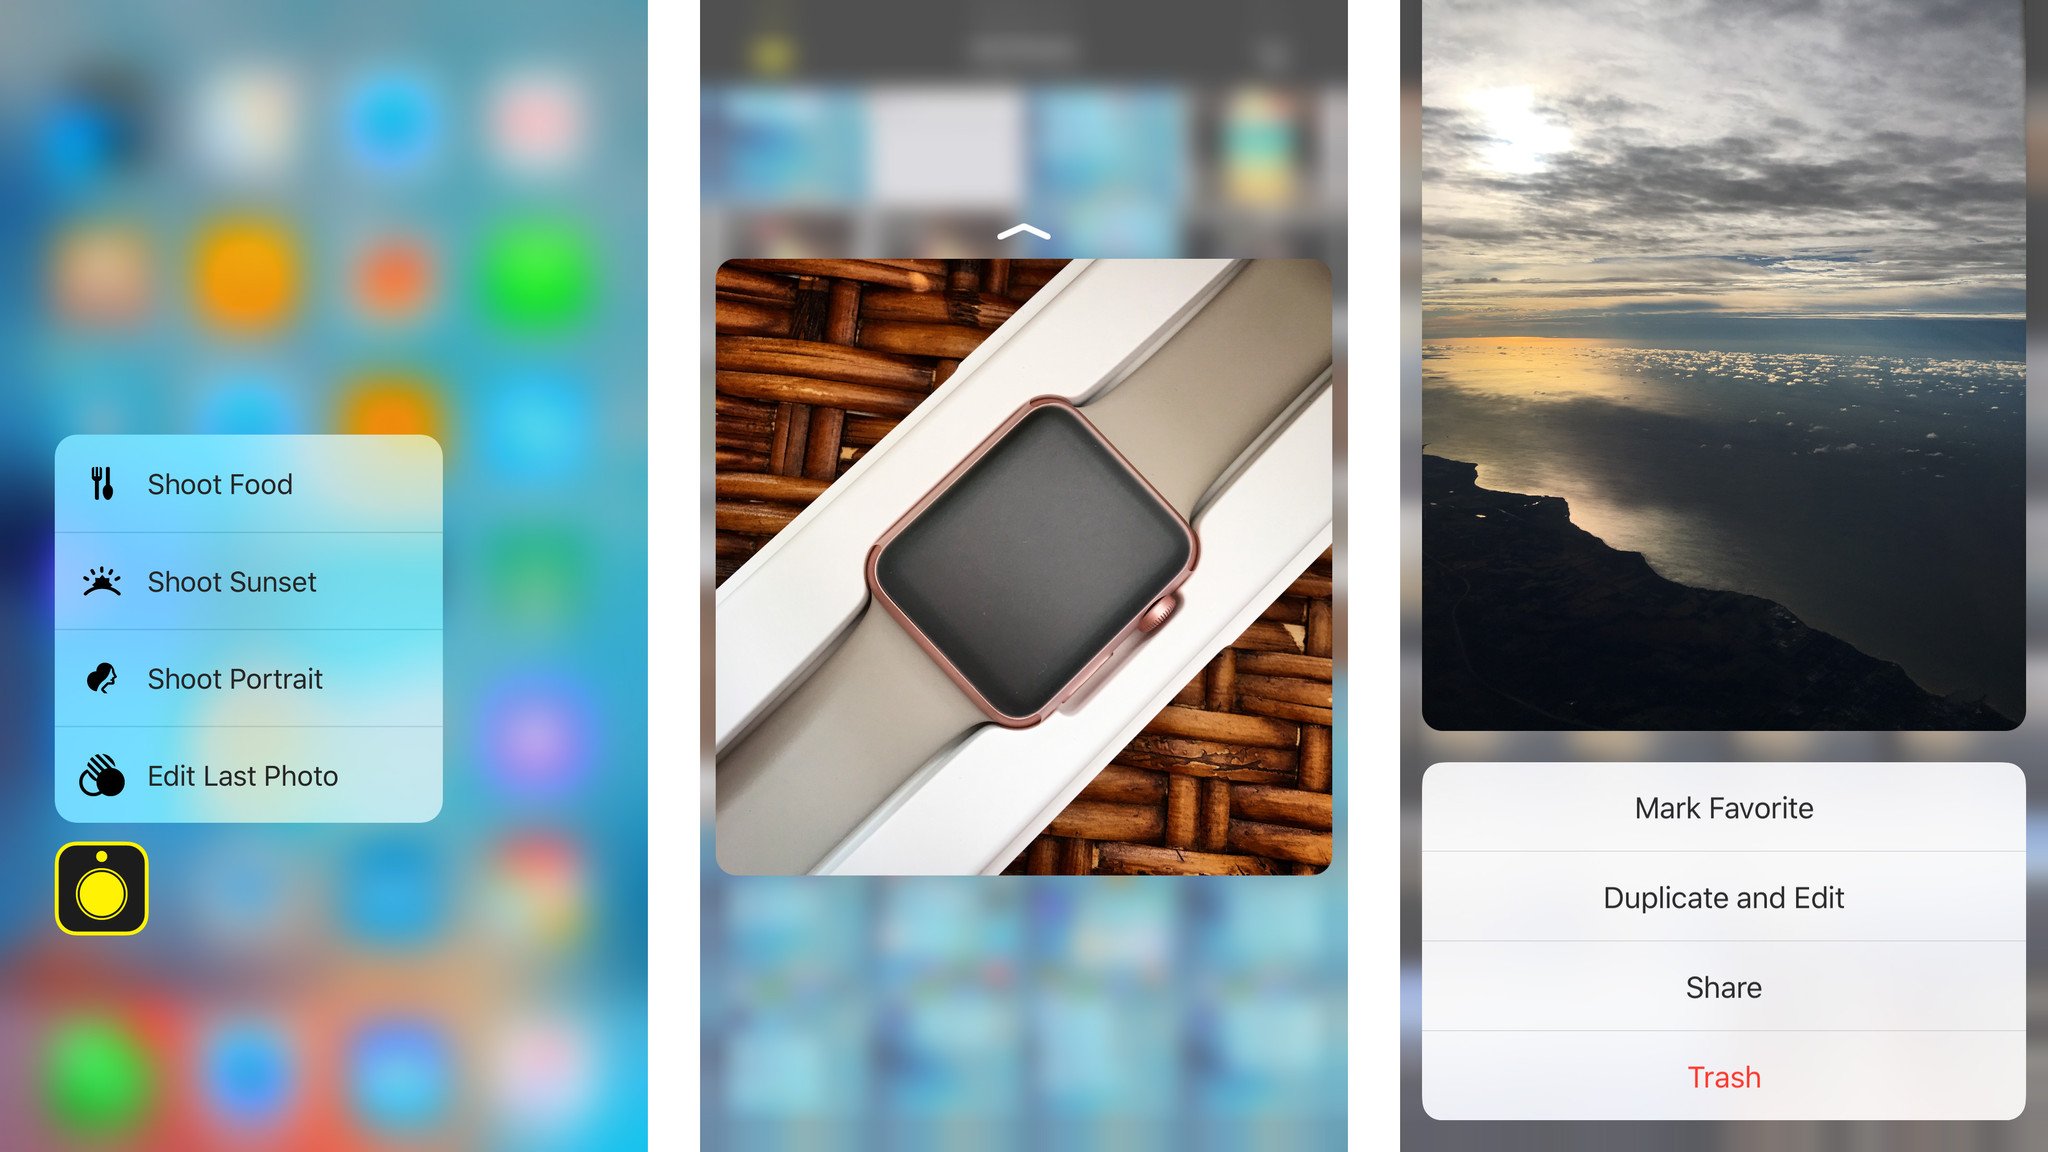 3d-touch - [iOS App] 10 ứng dụng hoạt động tốt với 3D Touch trên iPhone 6s/6s Plus Slide-3d-touch-hipstamatic-screens